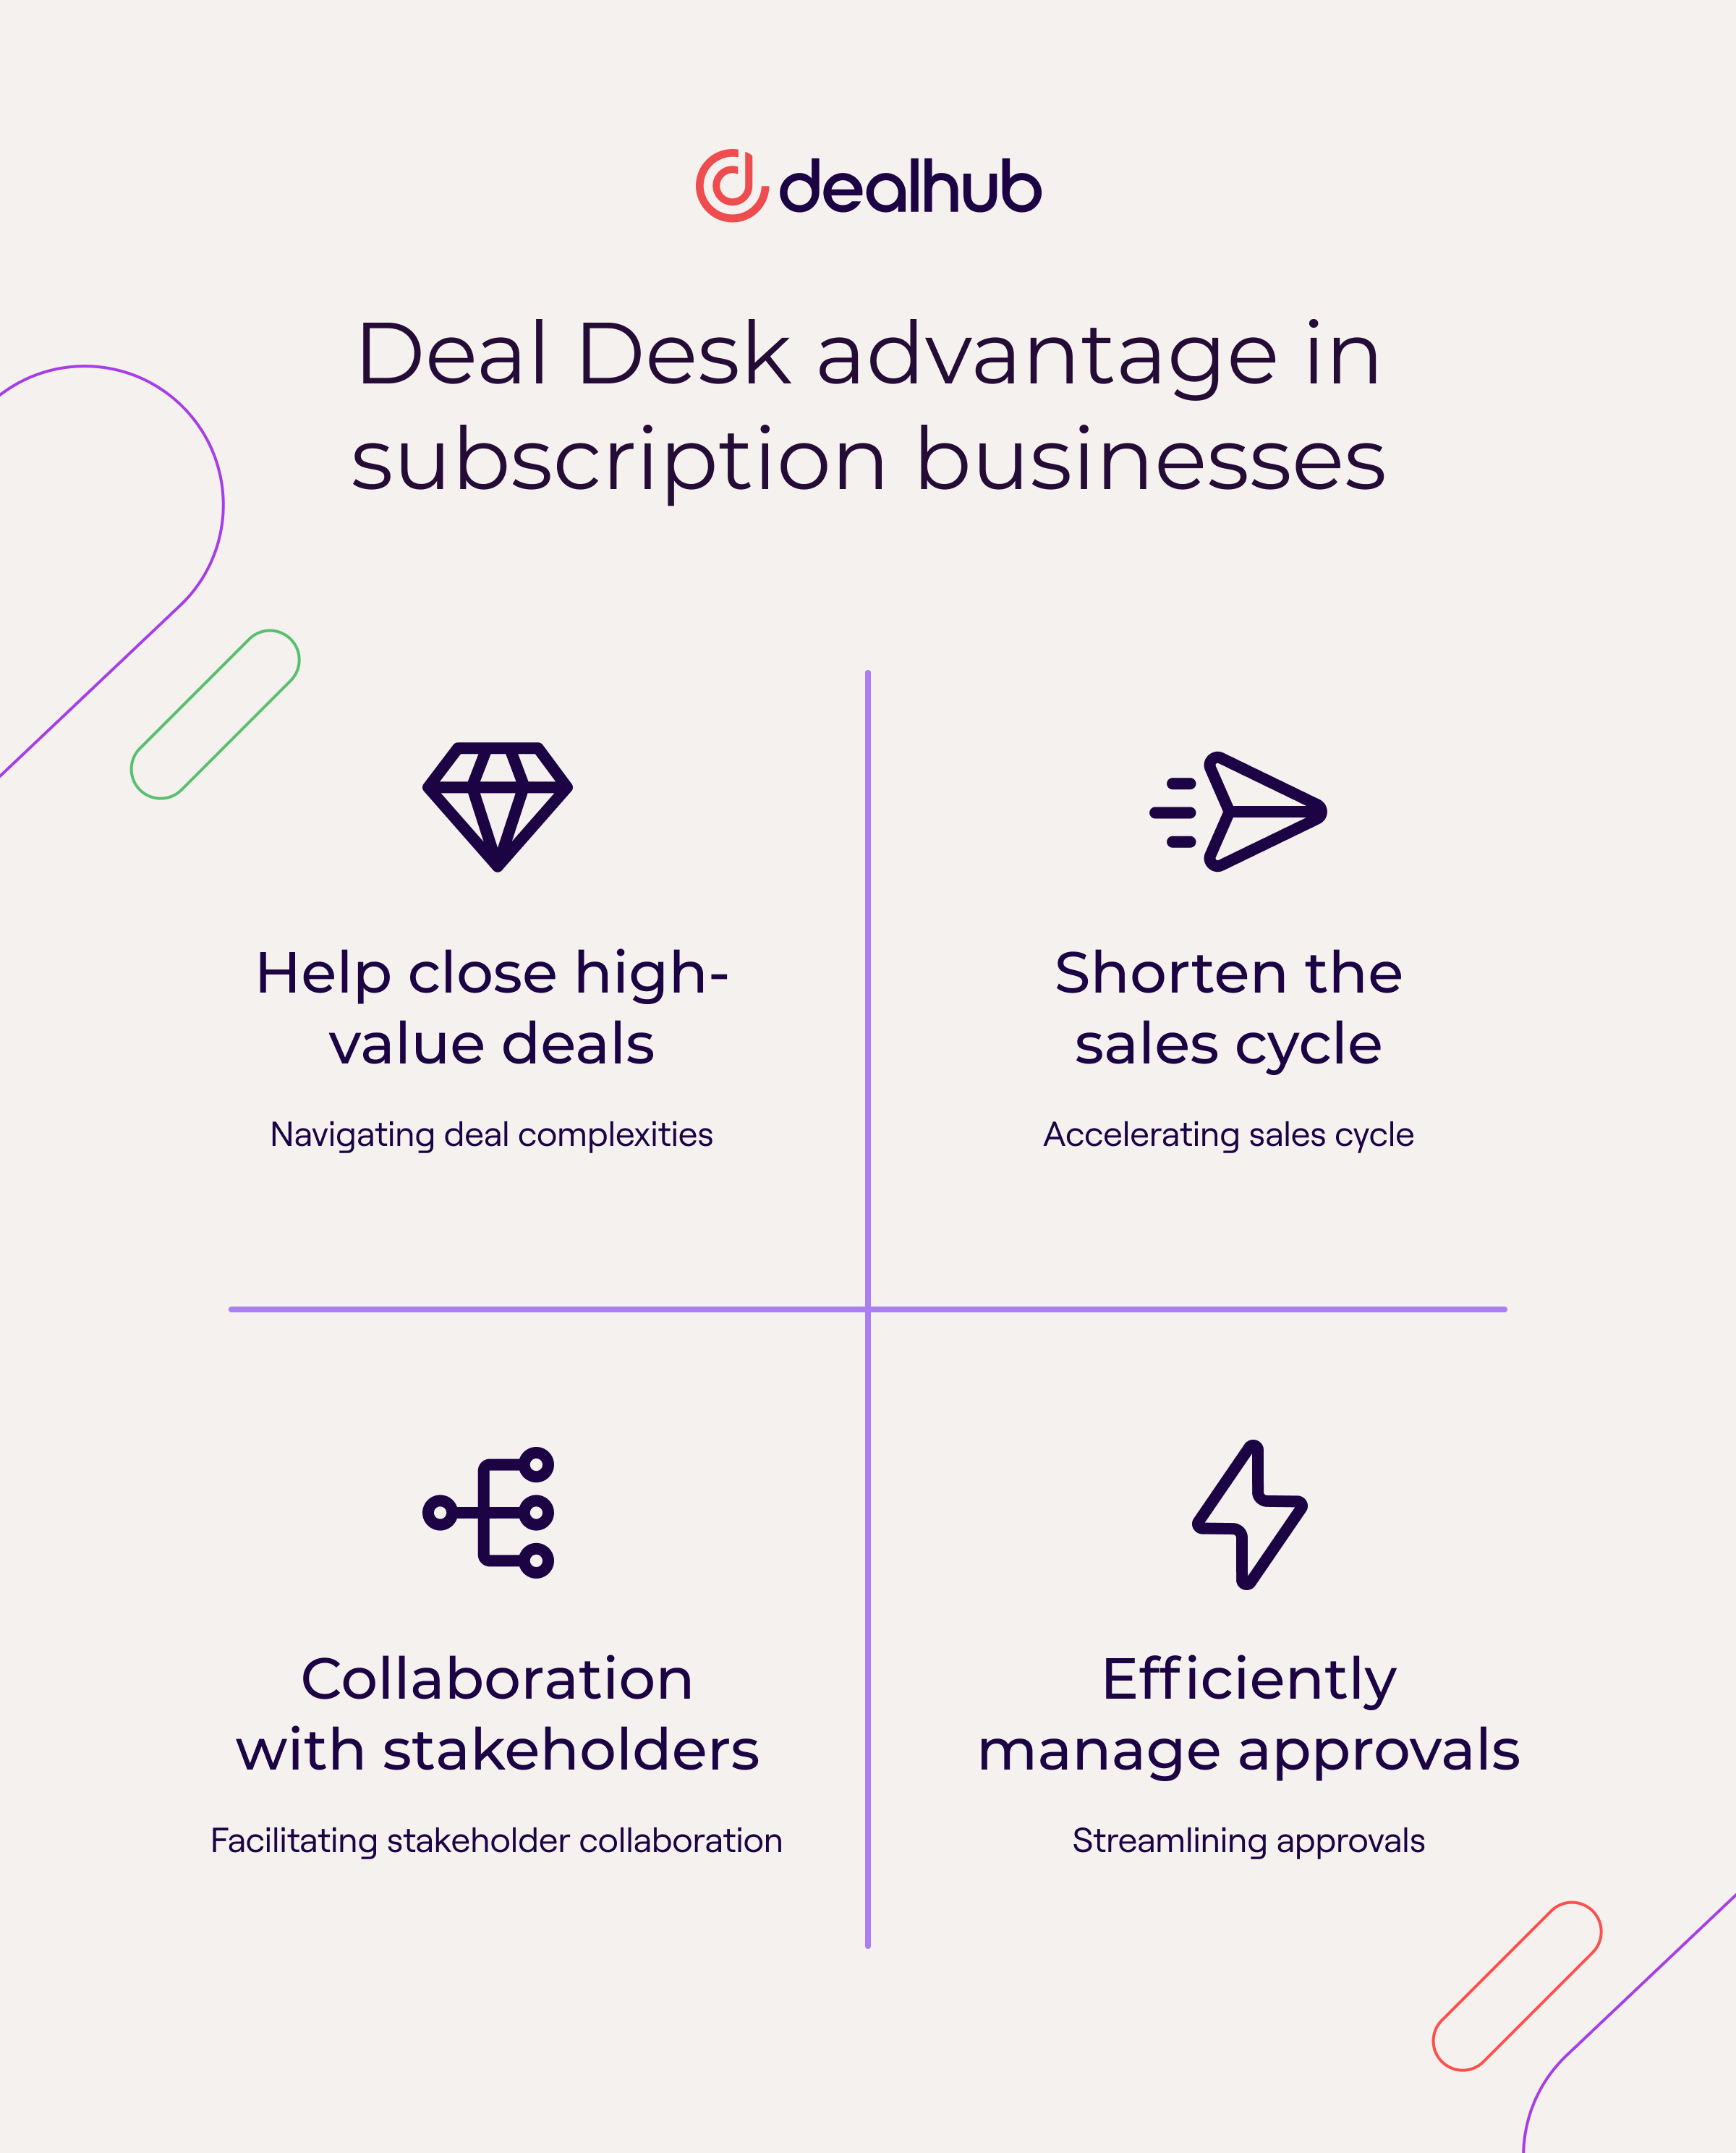 Benefits of a Deal Desk for subscription-based businesses